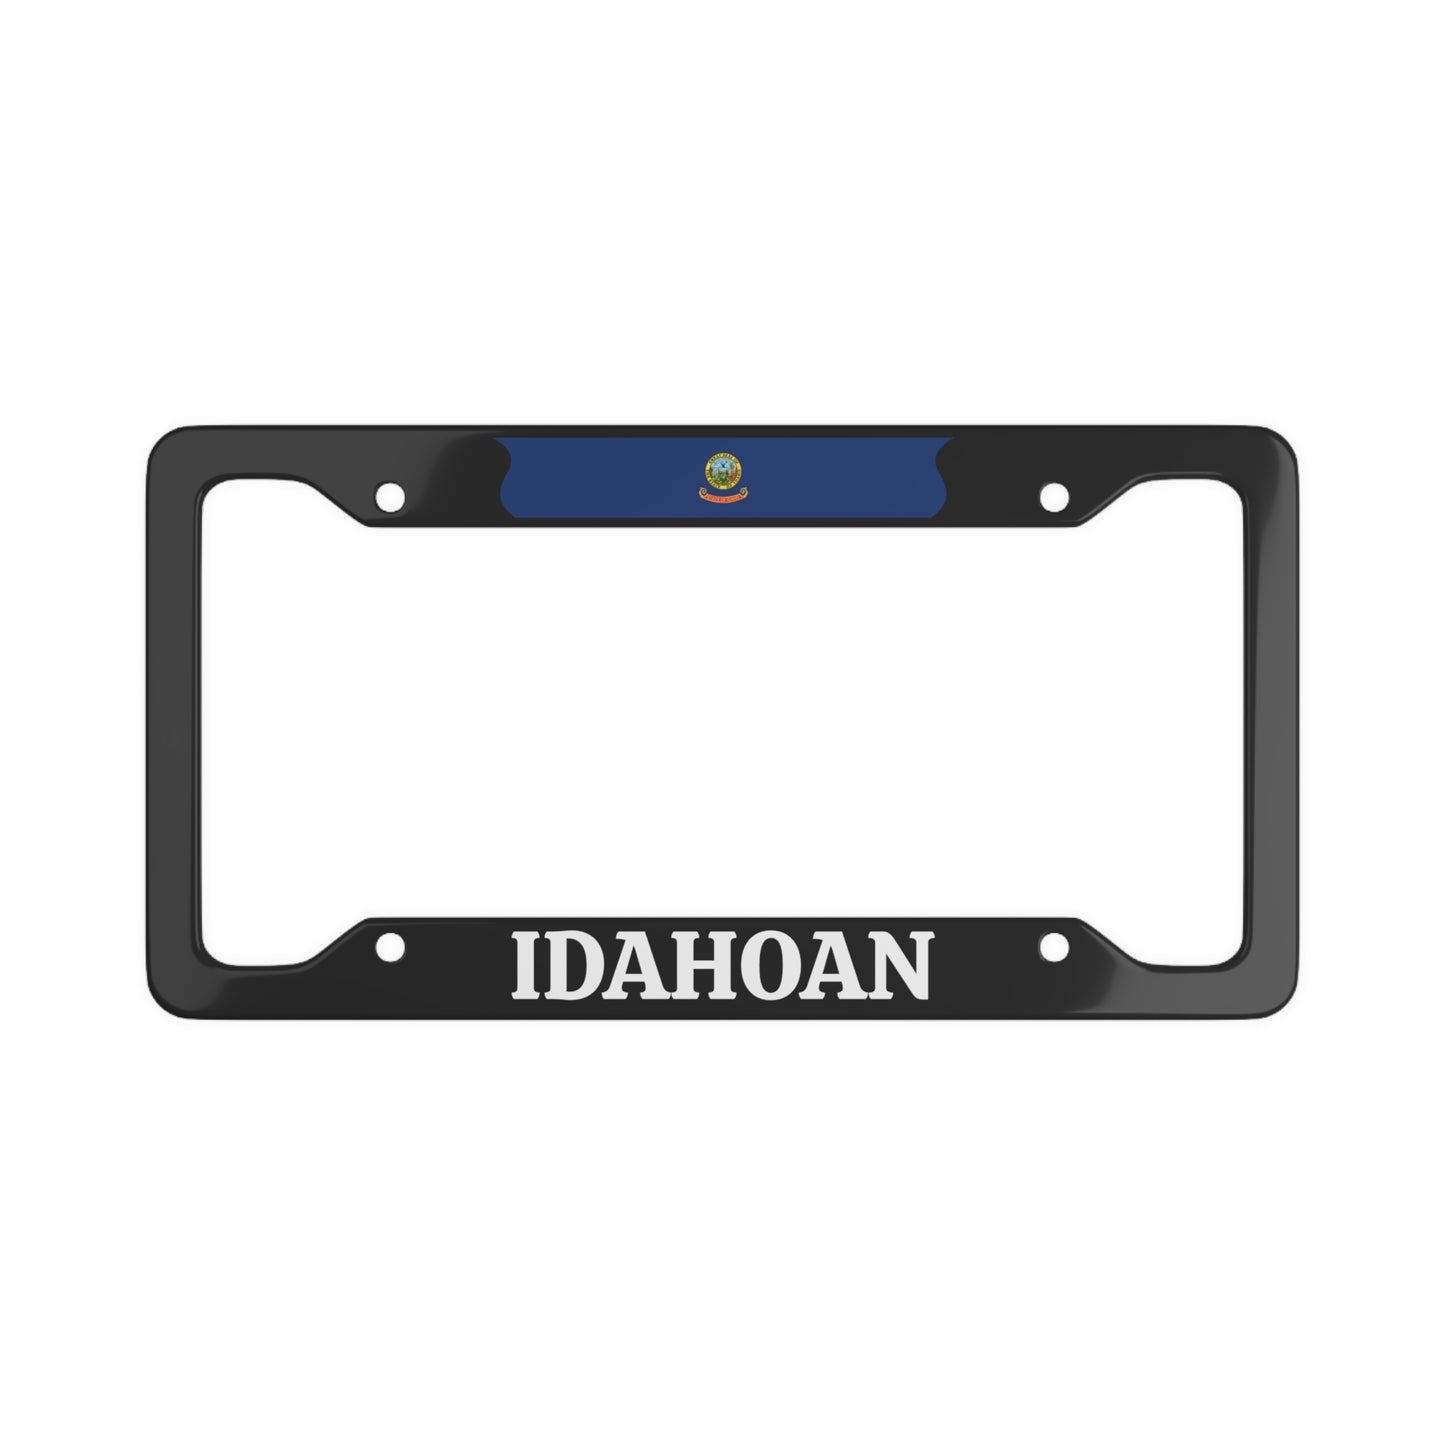 Idahoan, Idaho State, USA License Plate Frame